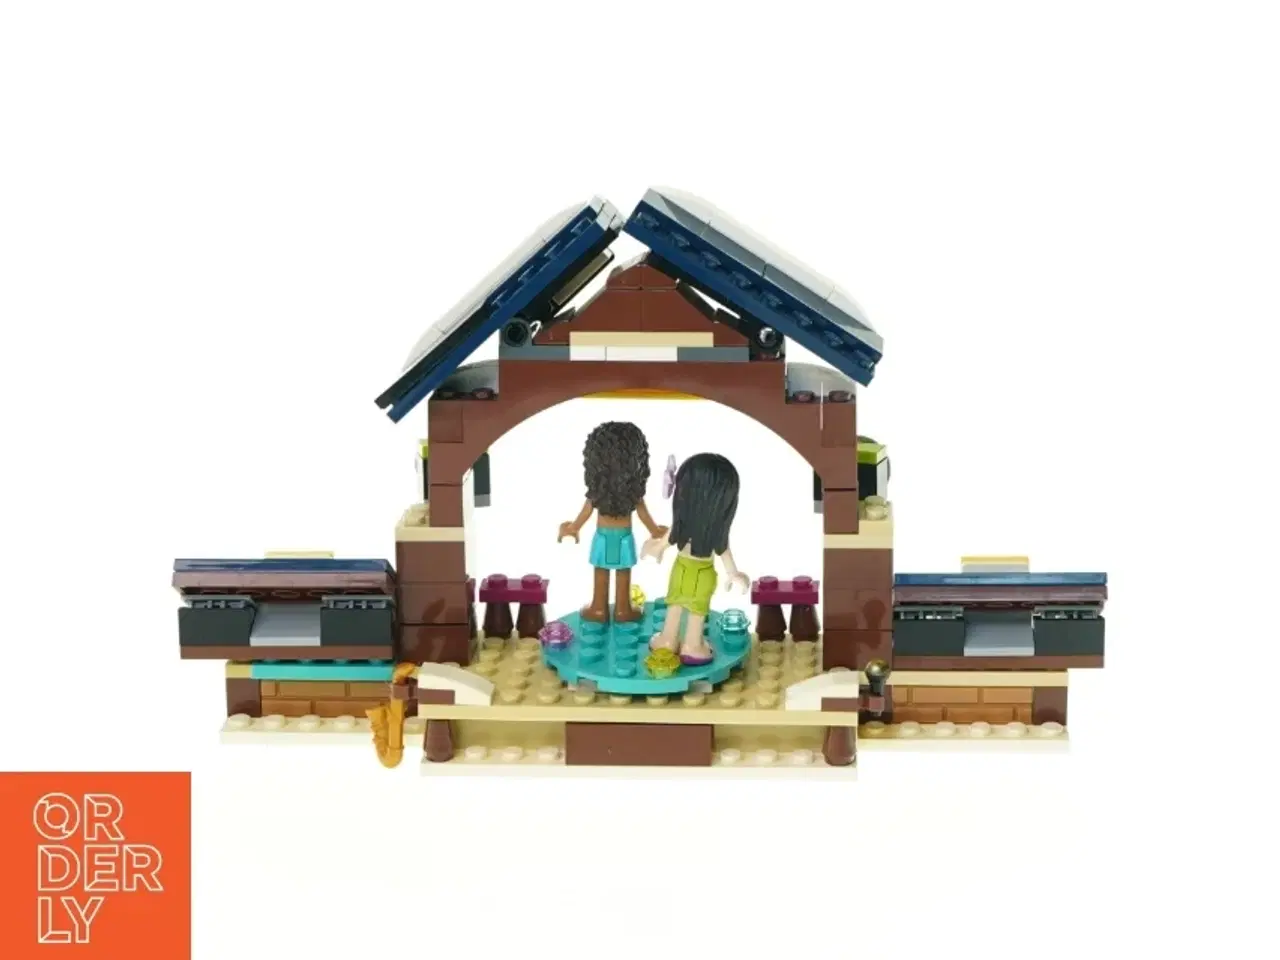 Billede 2 - Lego fra Lego friends (str. 20 x 5 x 13 cm)